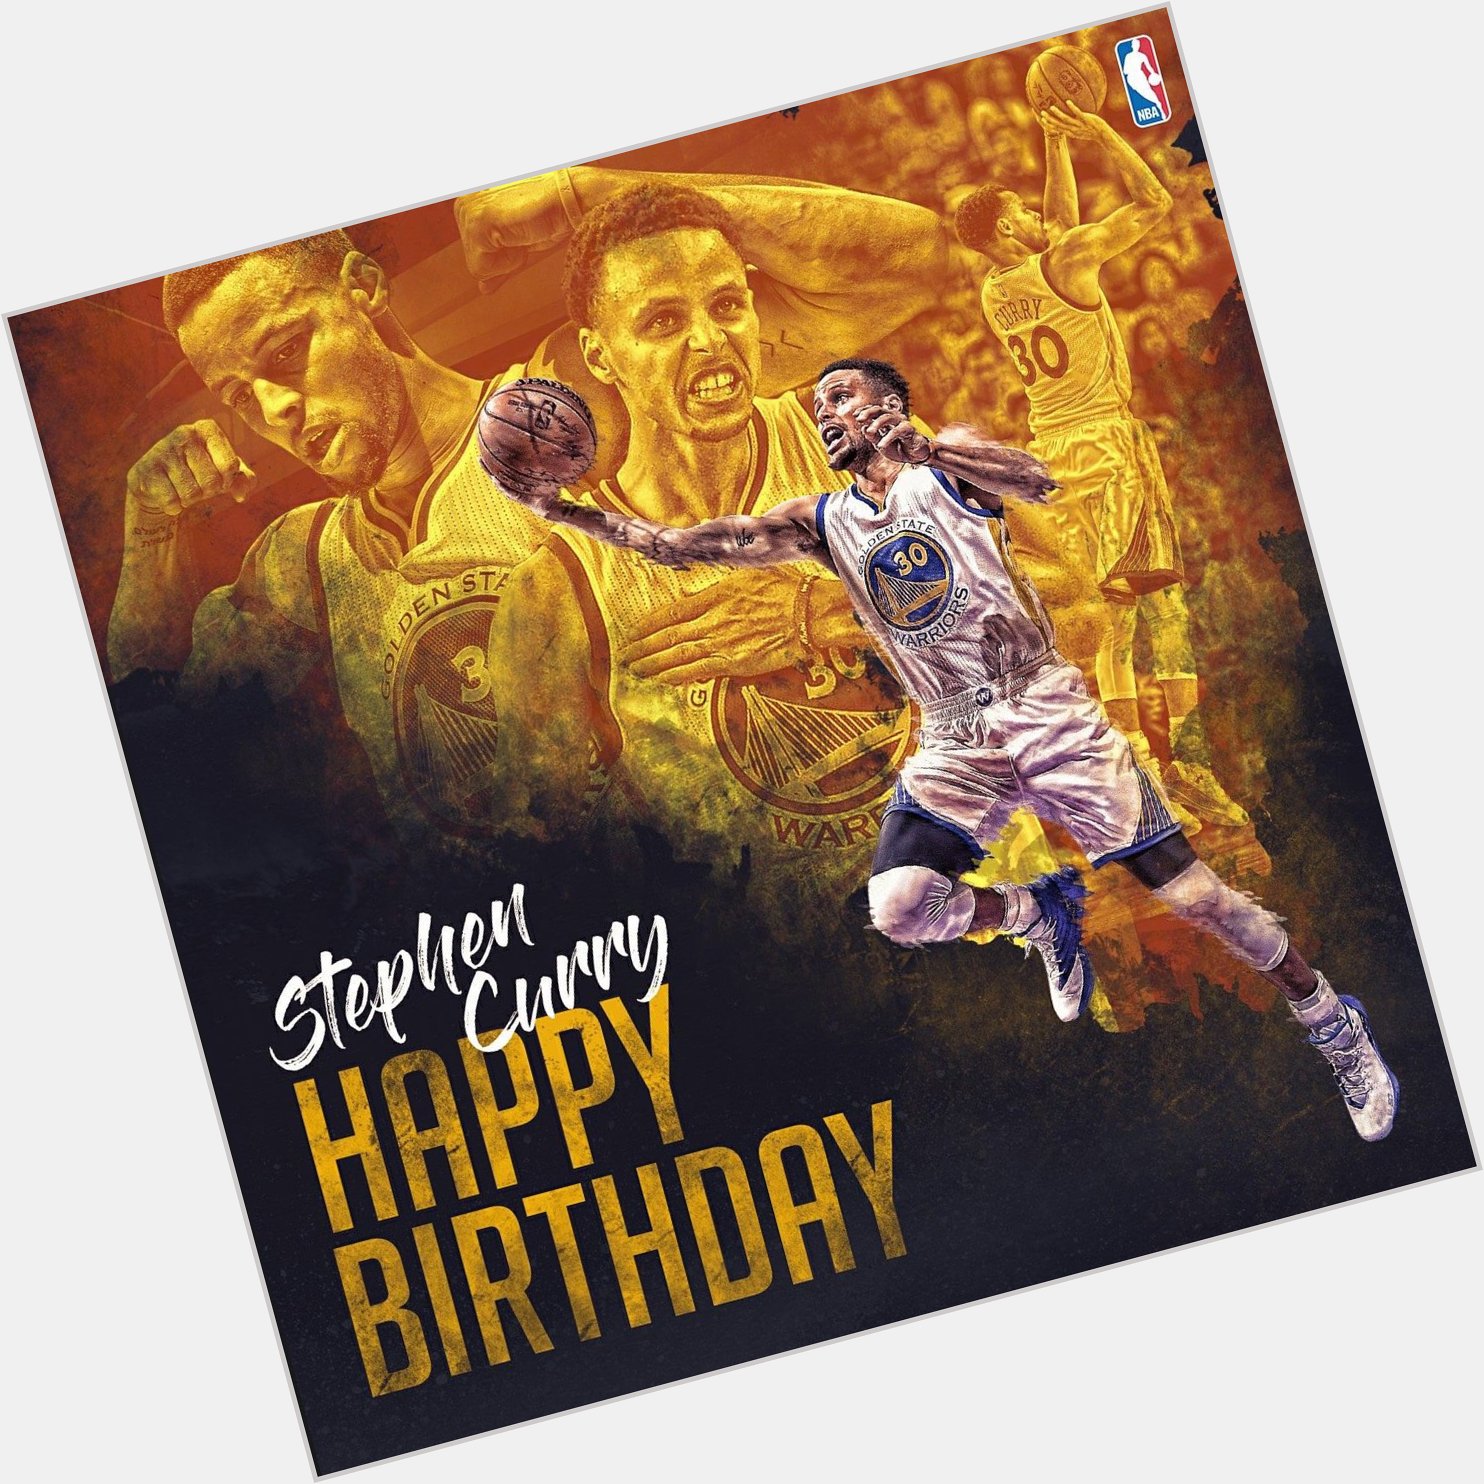 Happy birthday Stephen Curry  